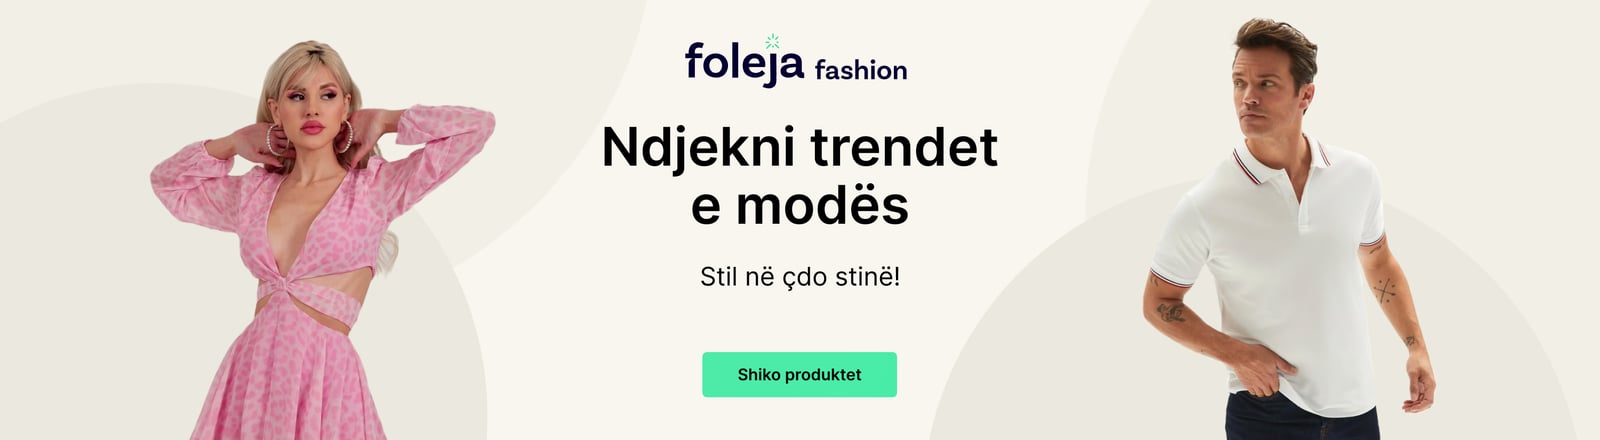 Banner-foleja-fashion-web